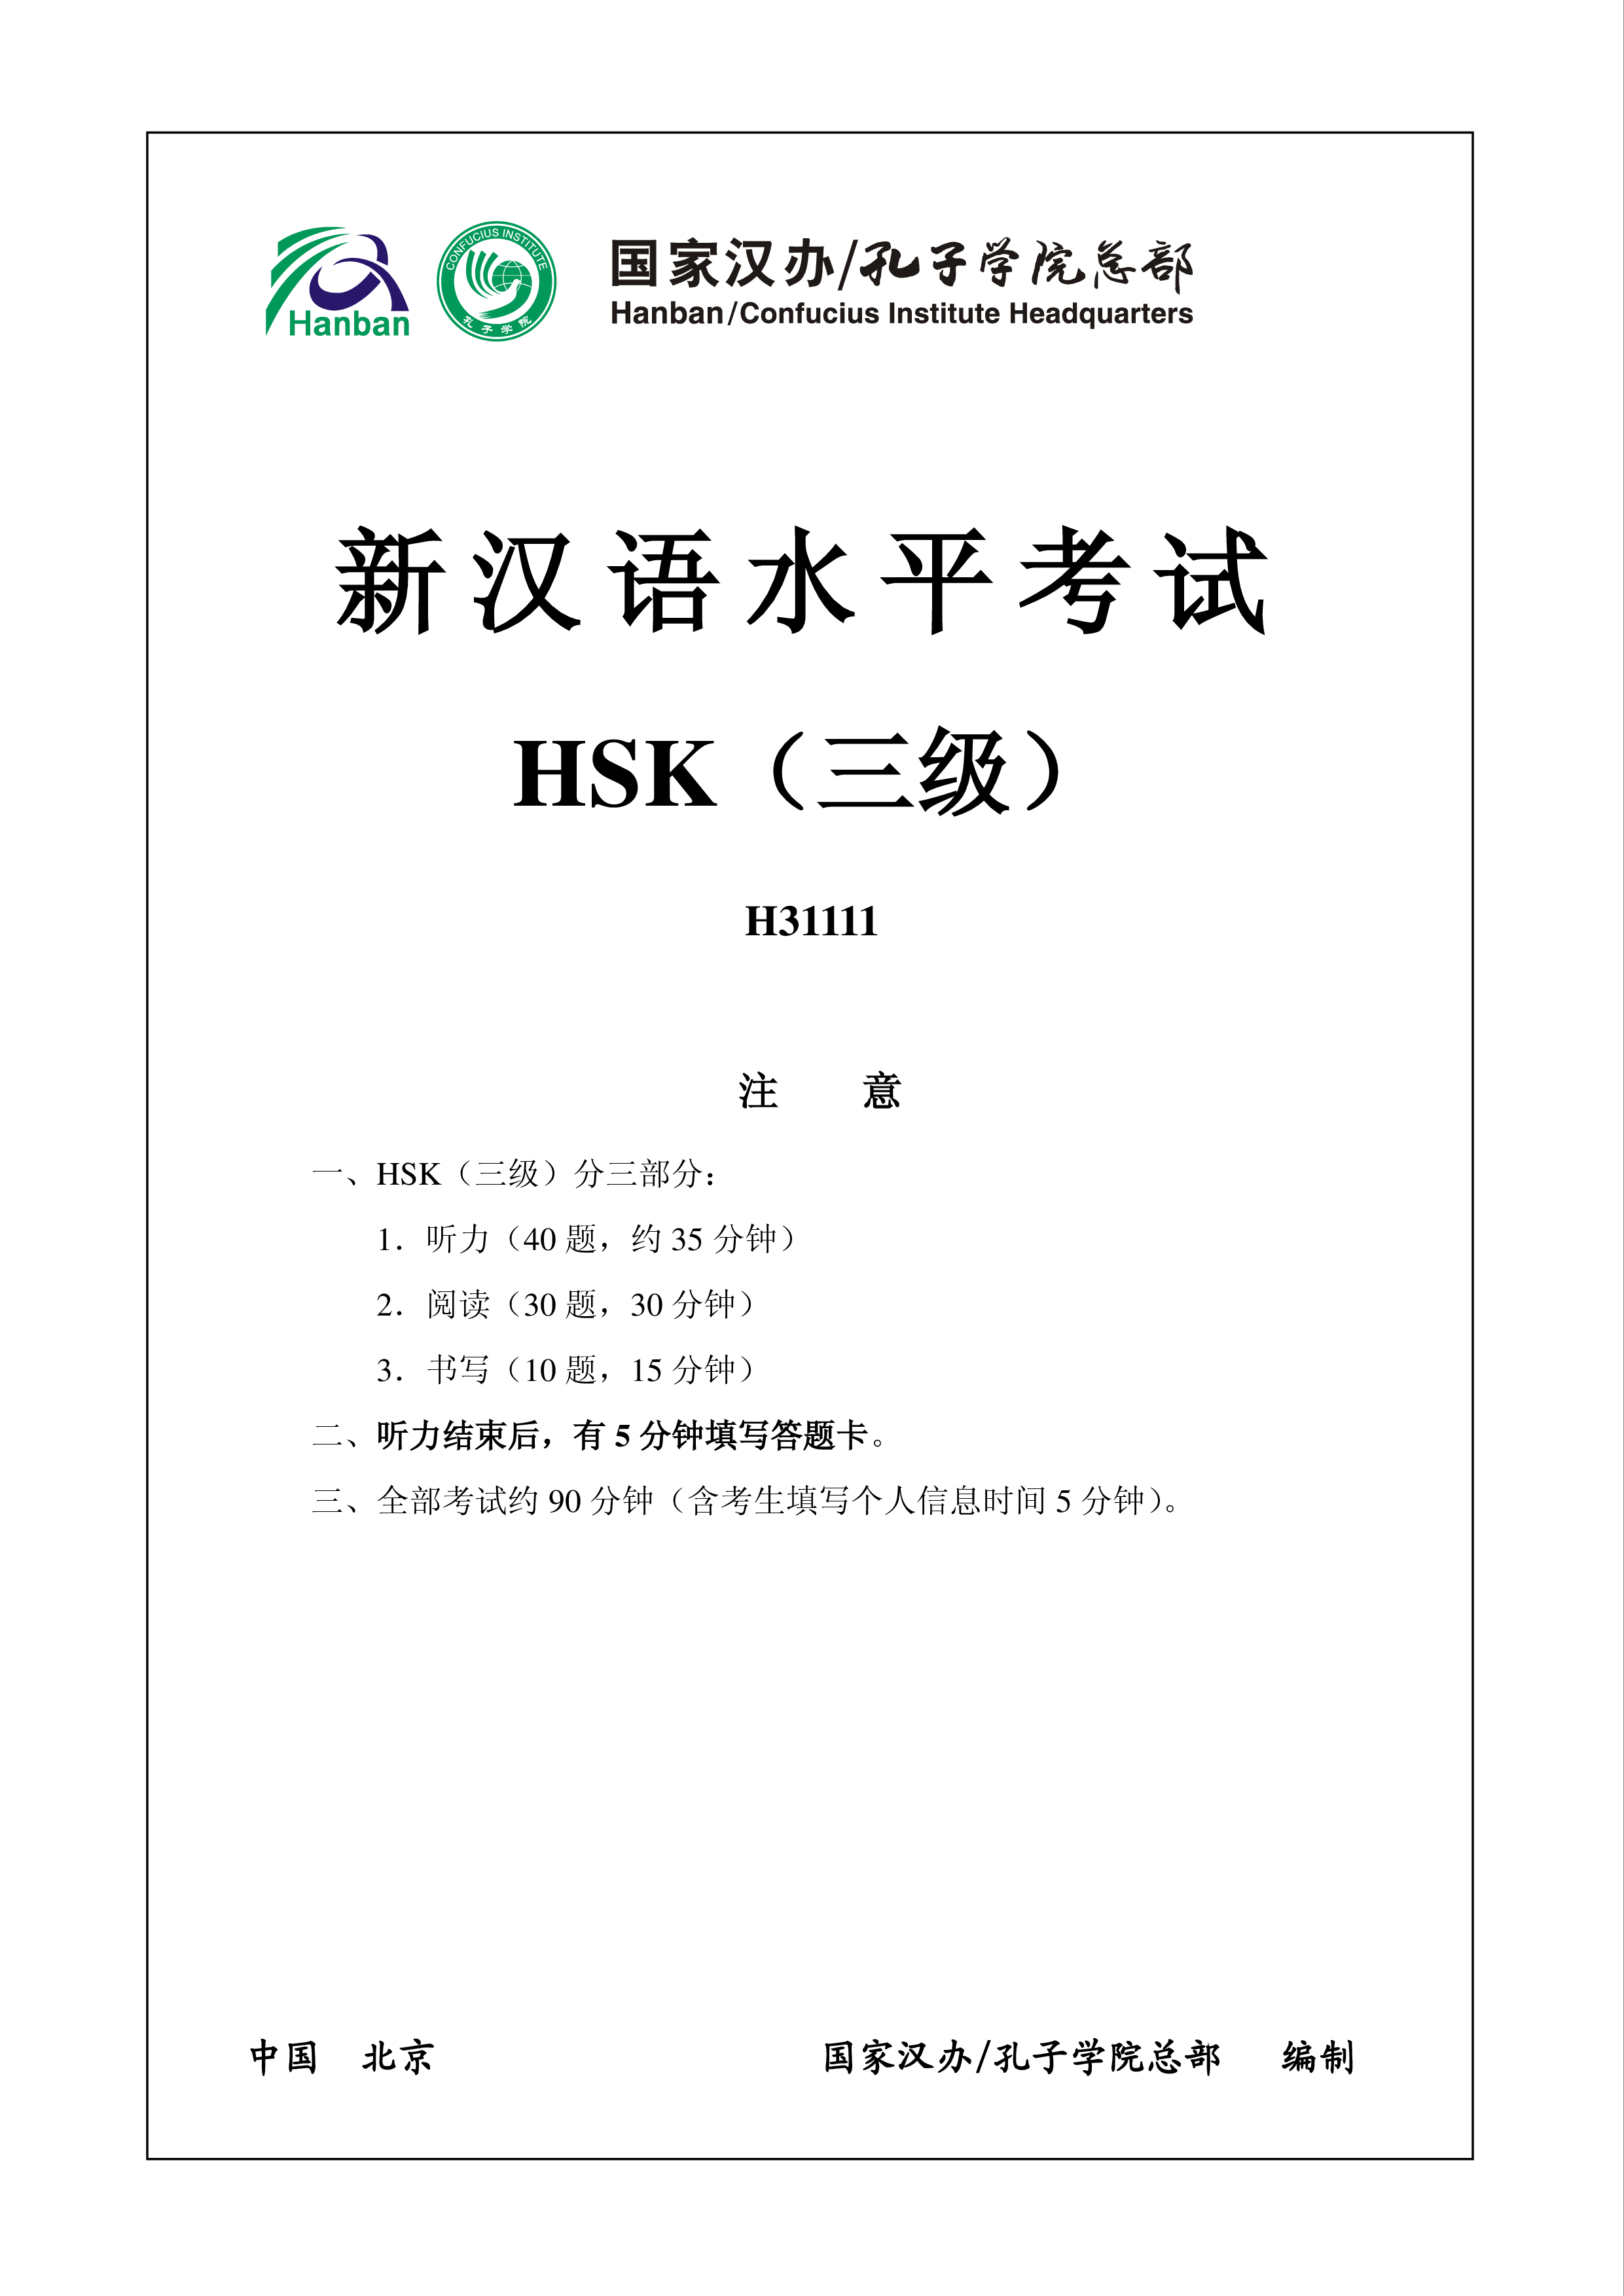 HSK 3 H31111 Exam Paper main image